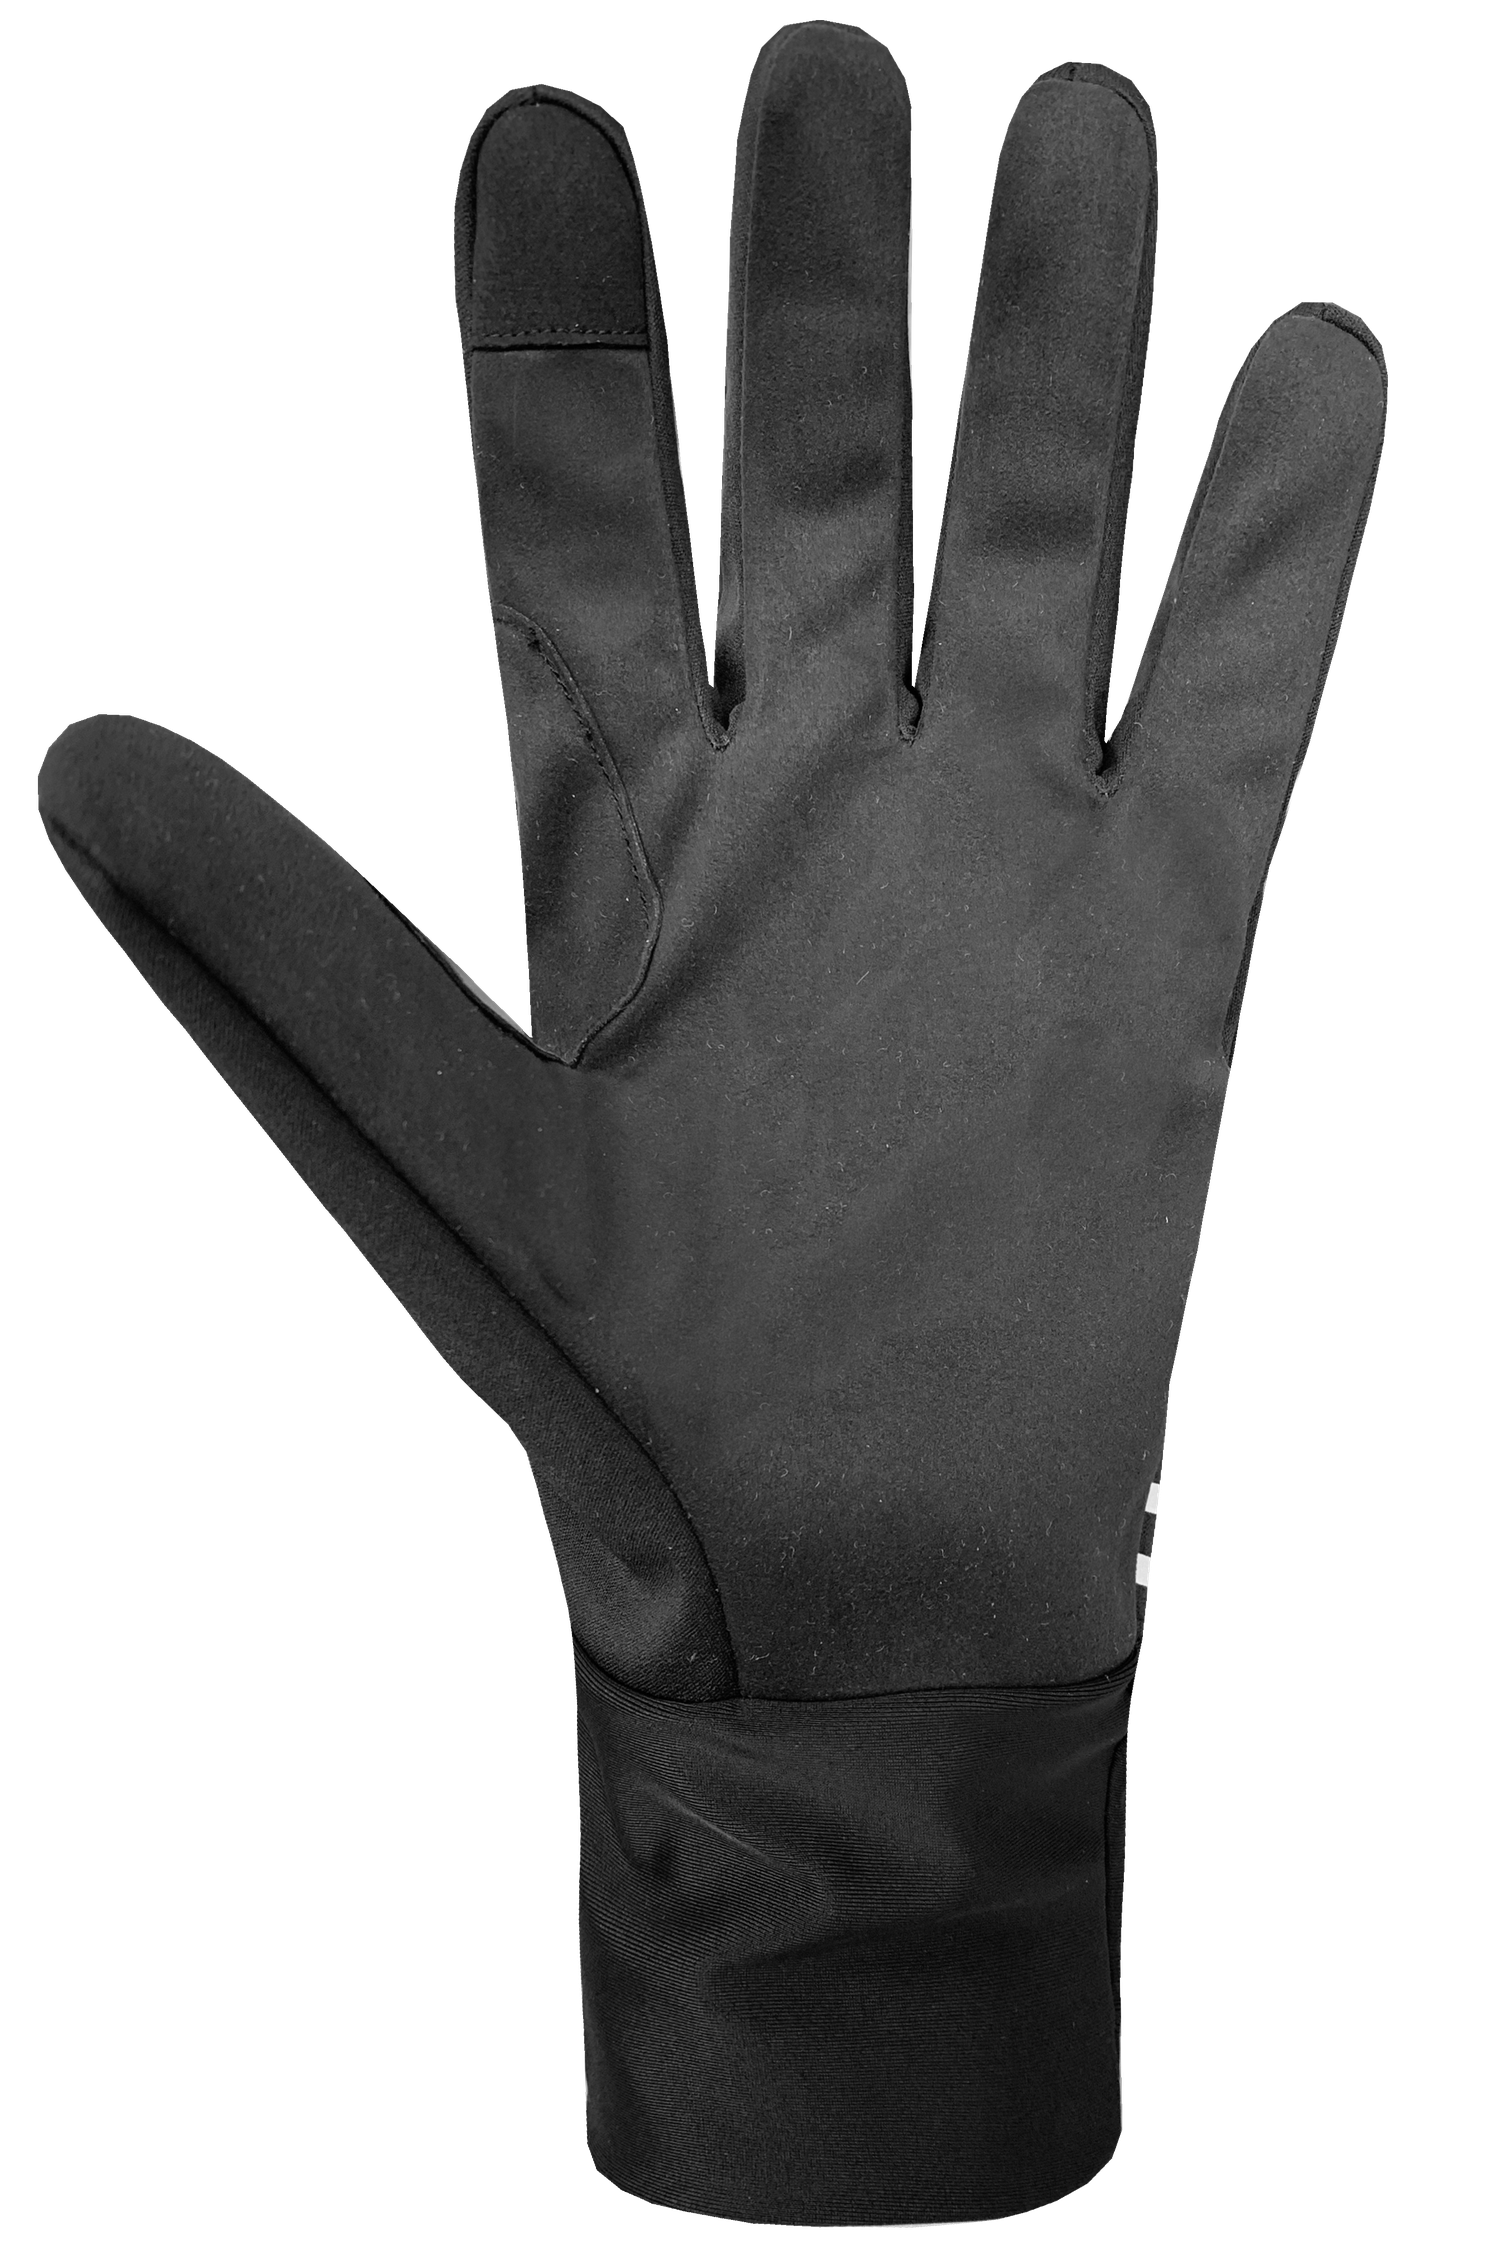 Elite XC Gloves - Adult, Black